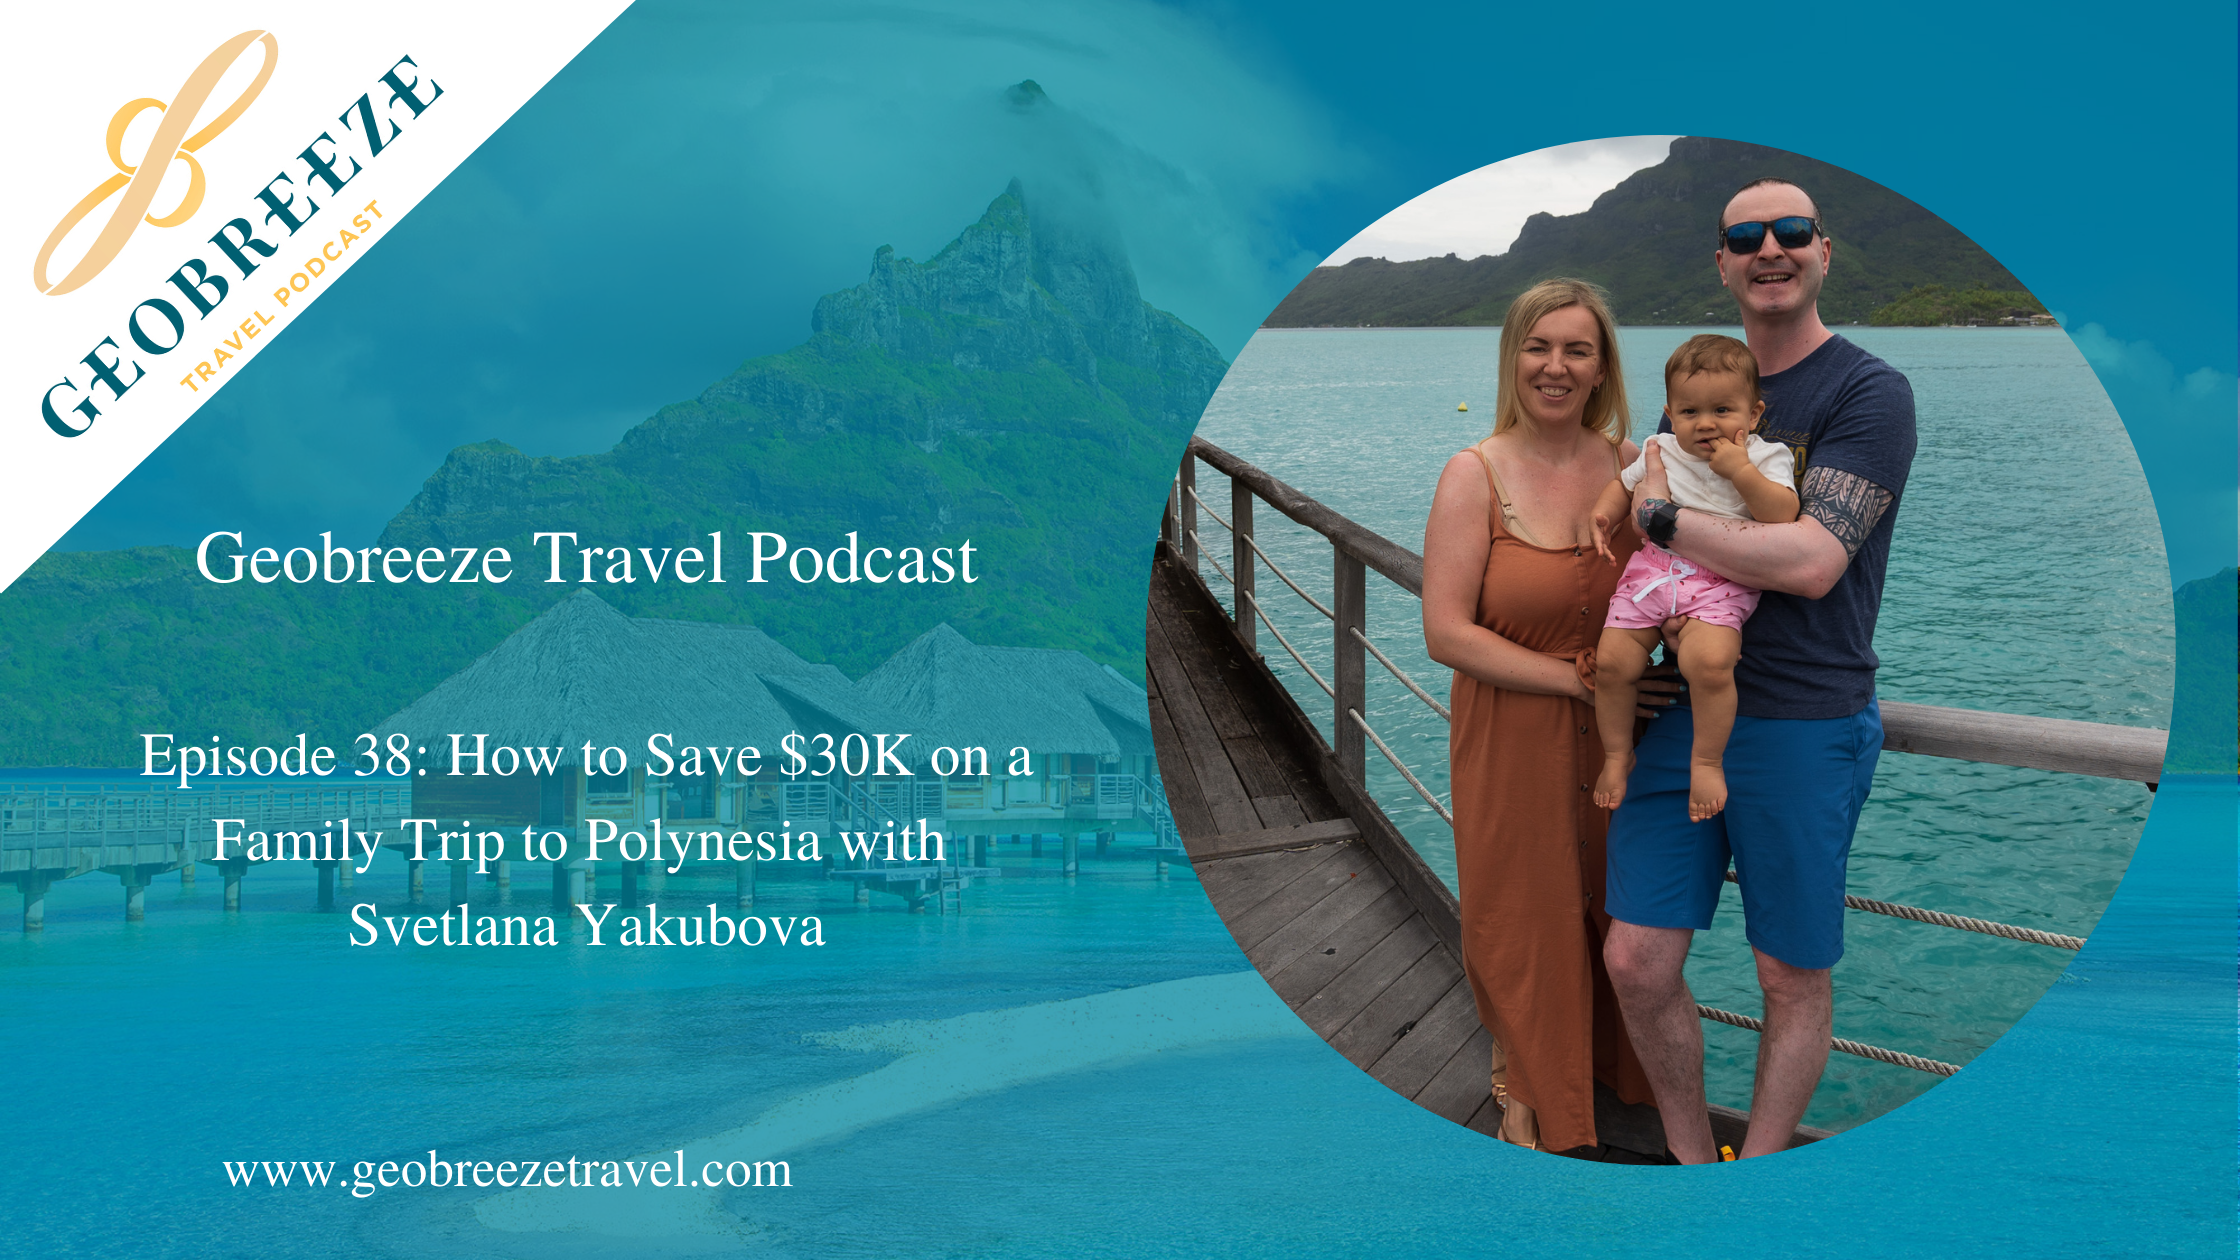 Episode 38: How to Save $30K on a Family Trip to Polynesia with Svetlana Yakubova